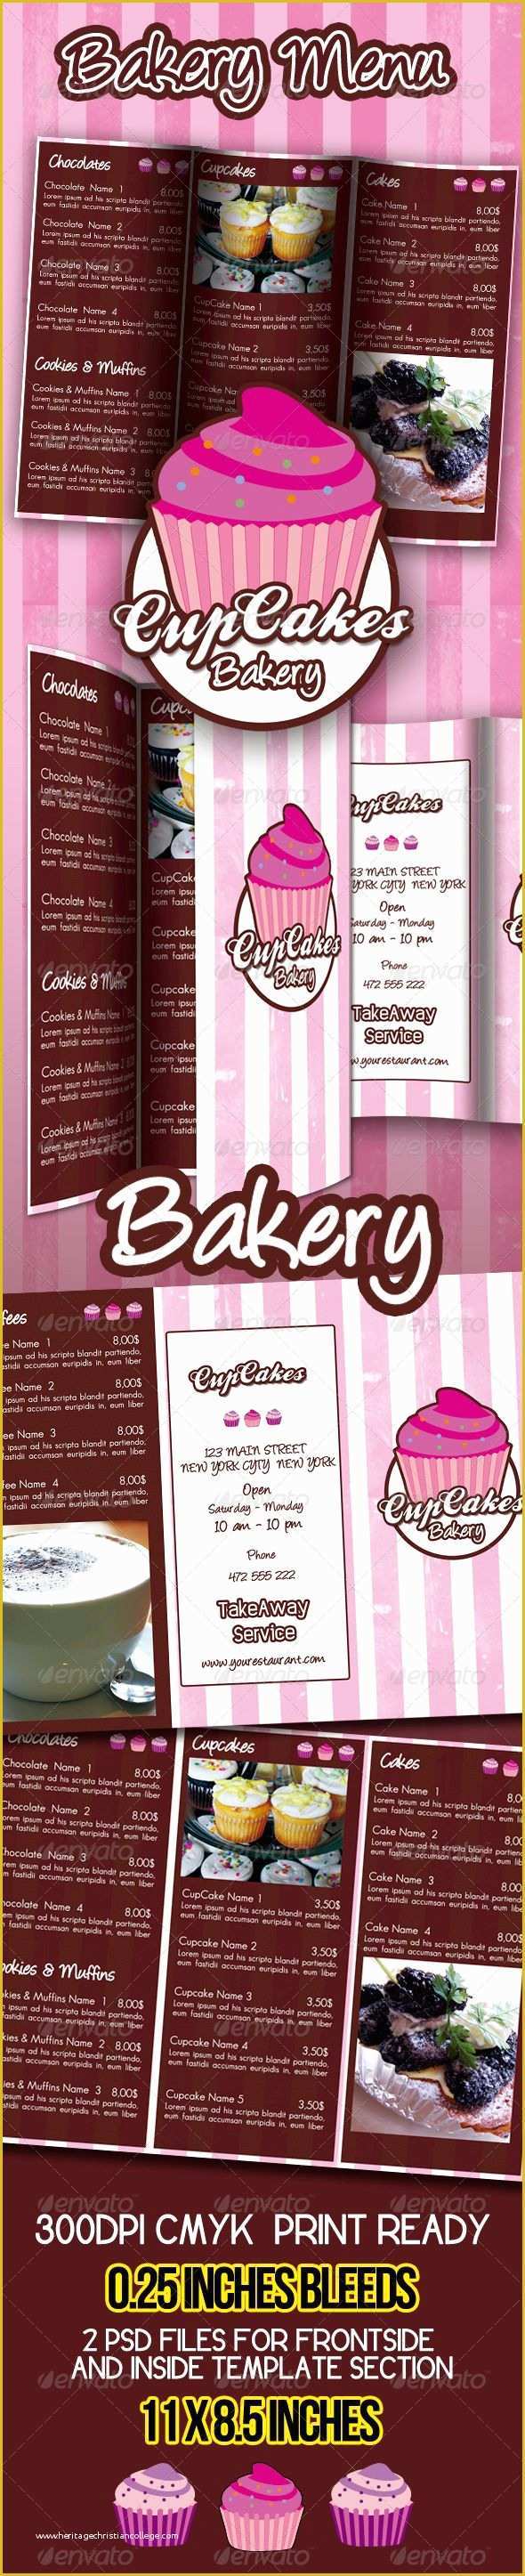 Free Cupcake Menu Template Of 25 Best Ideas About Bakery Menu On Pinterest